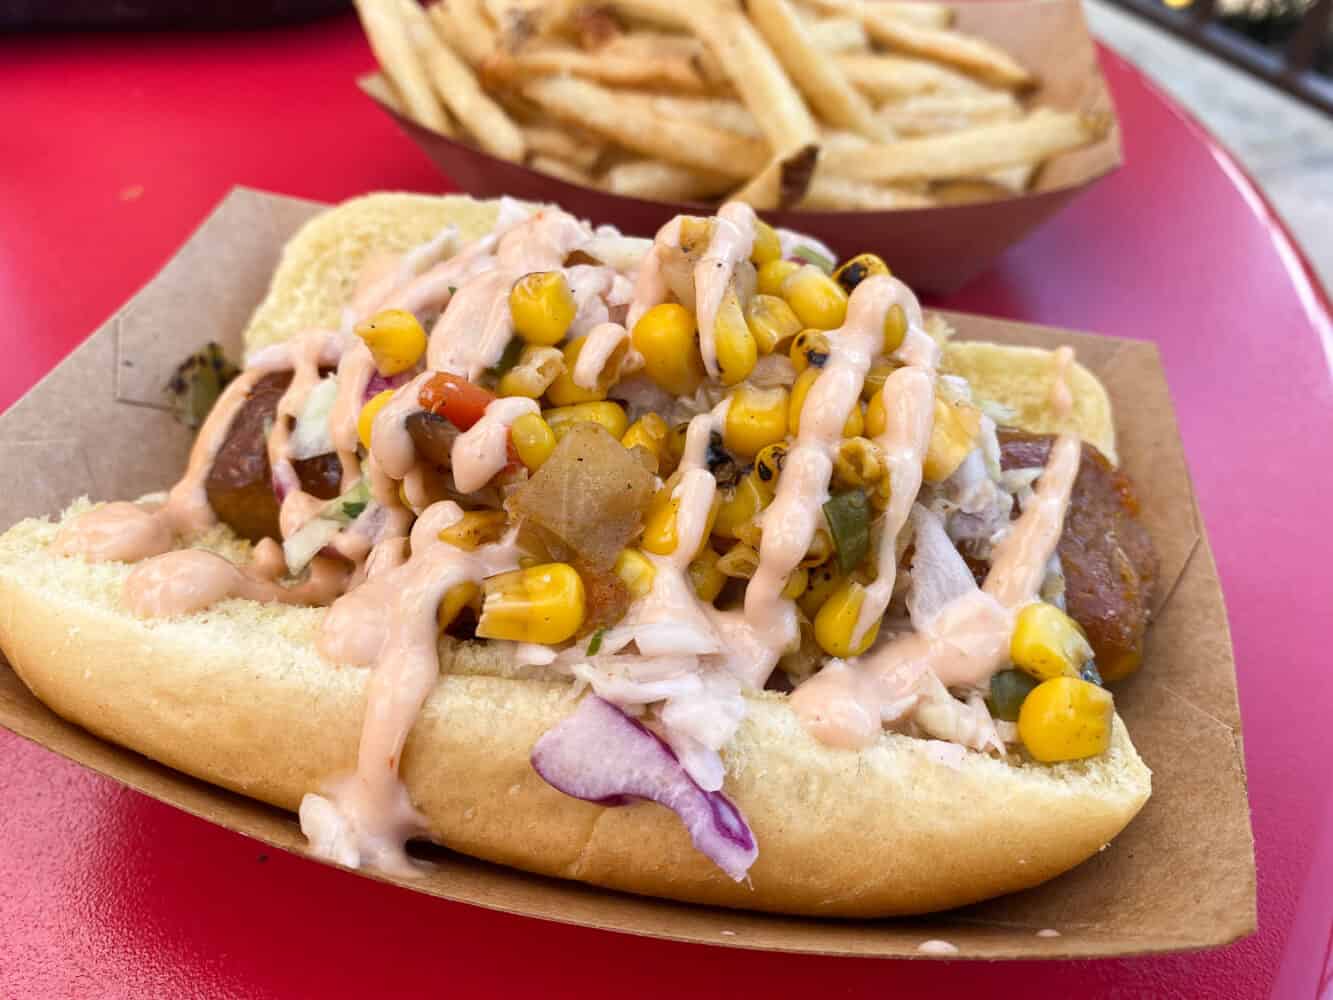 Vegan hot dog with sweetcorn and relish from Casey's Corner, Magic Kingdom, Disney World